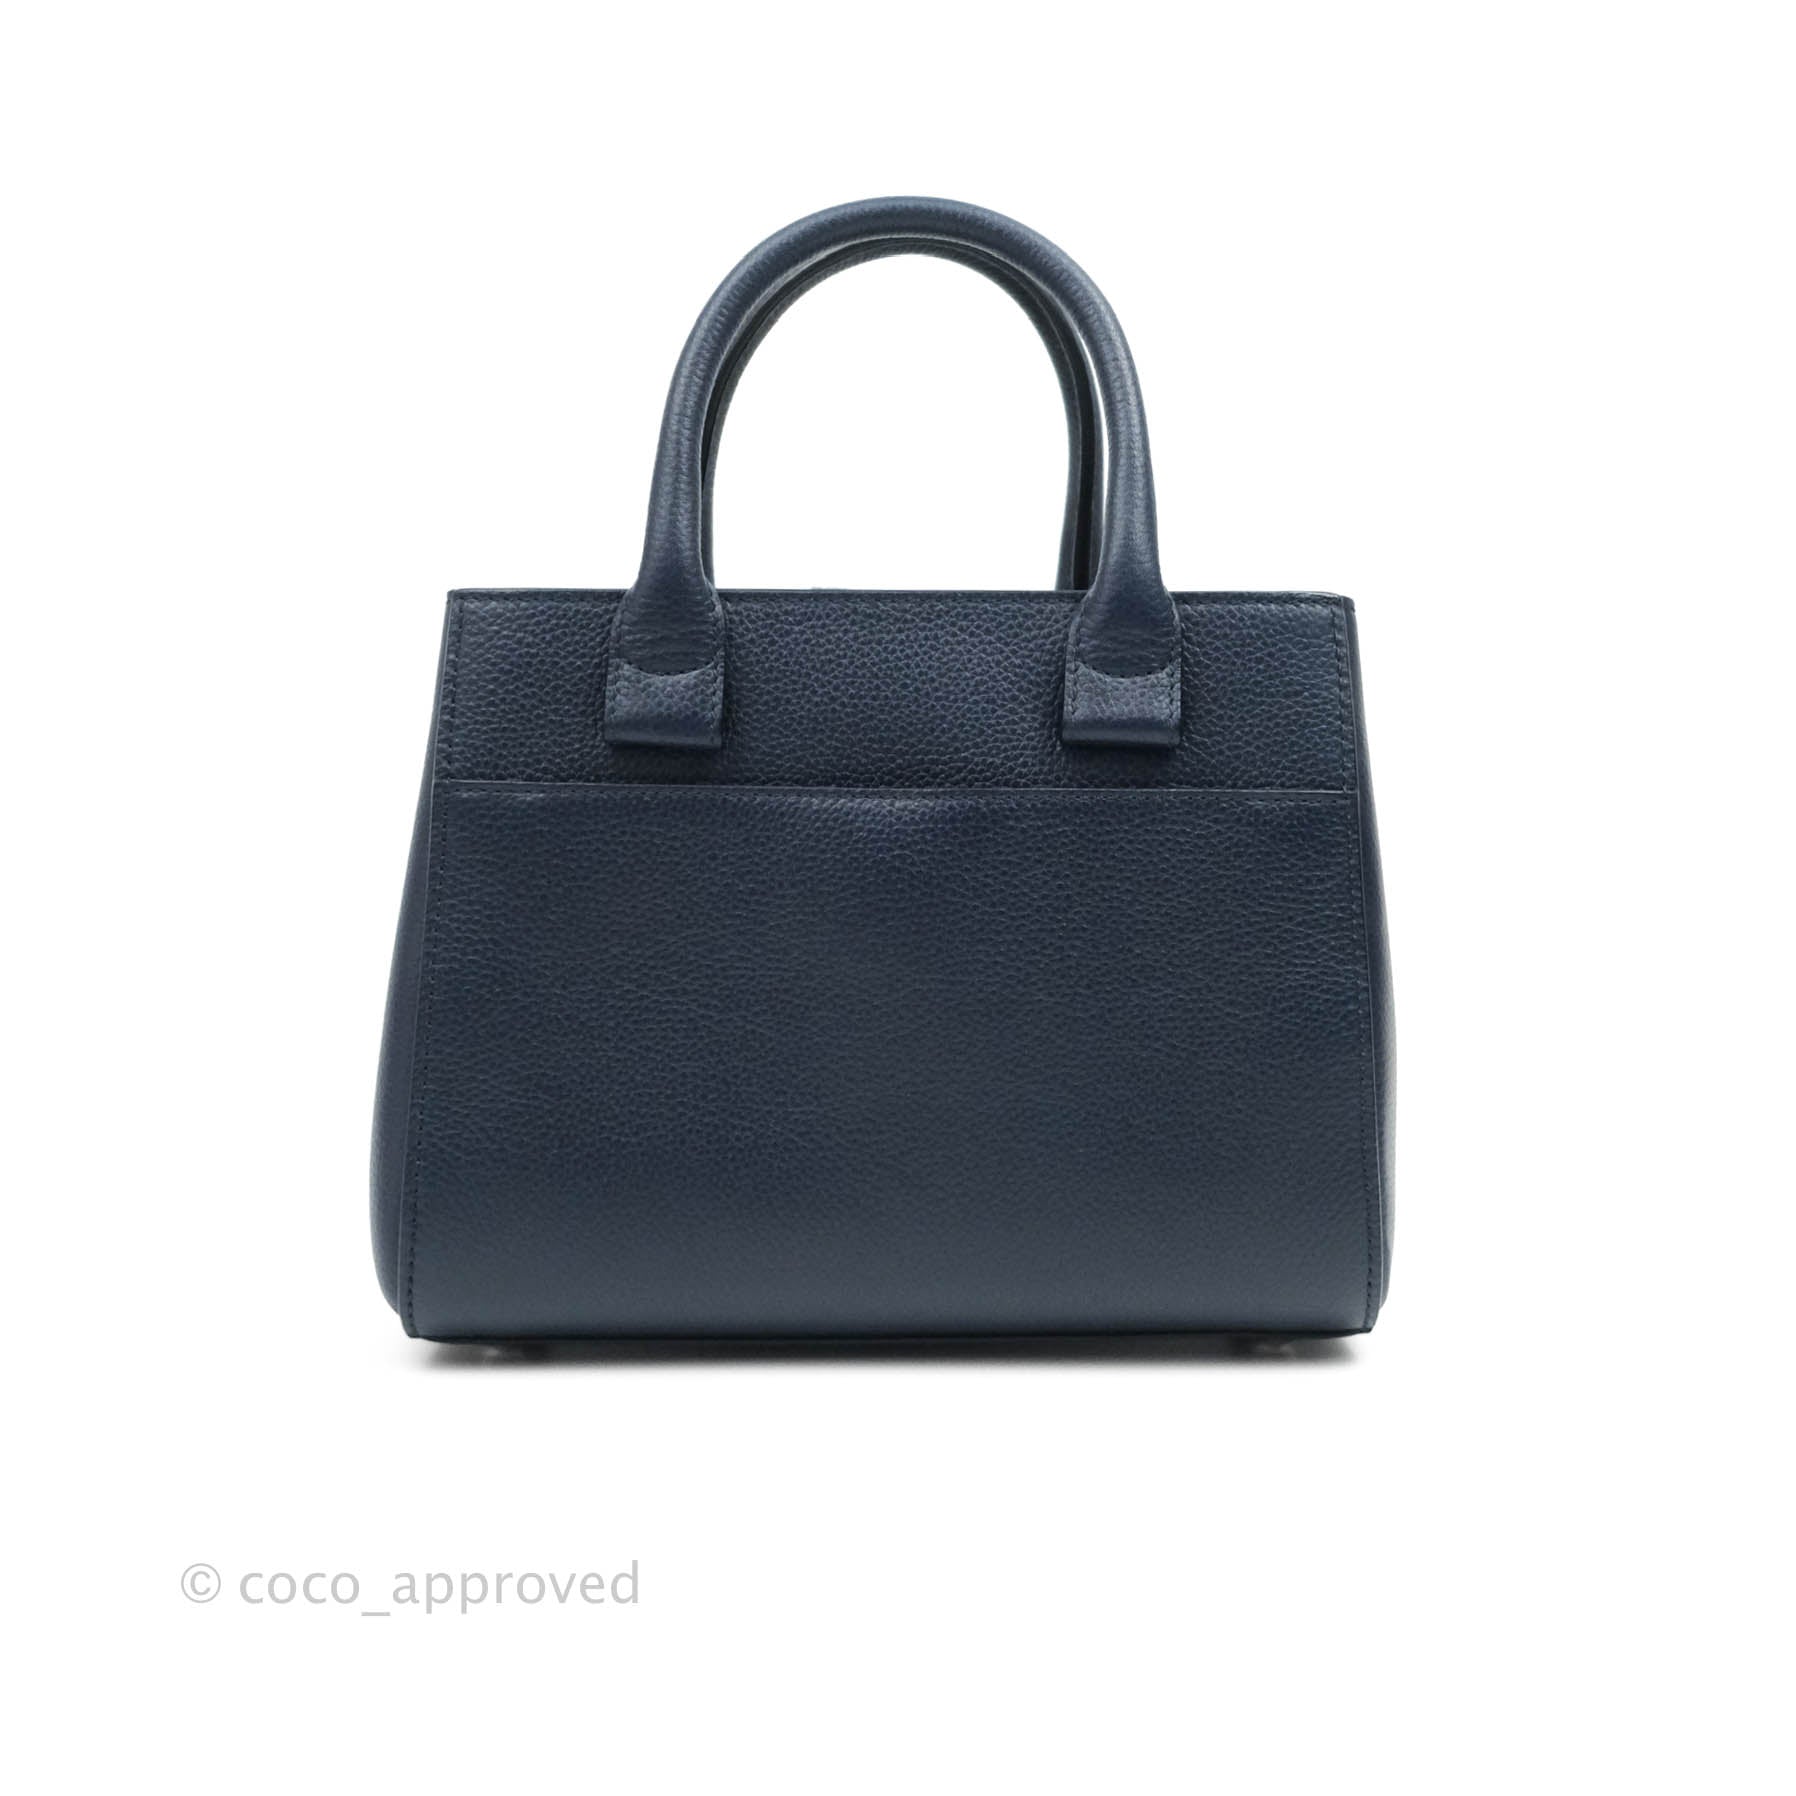 Chanel Black Grained Calfskin Leather Neo Executive Mini Tote Bag